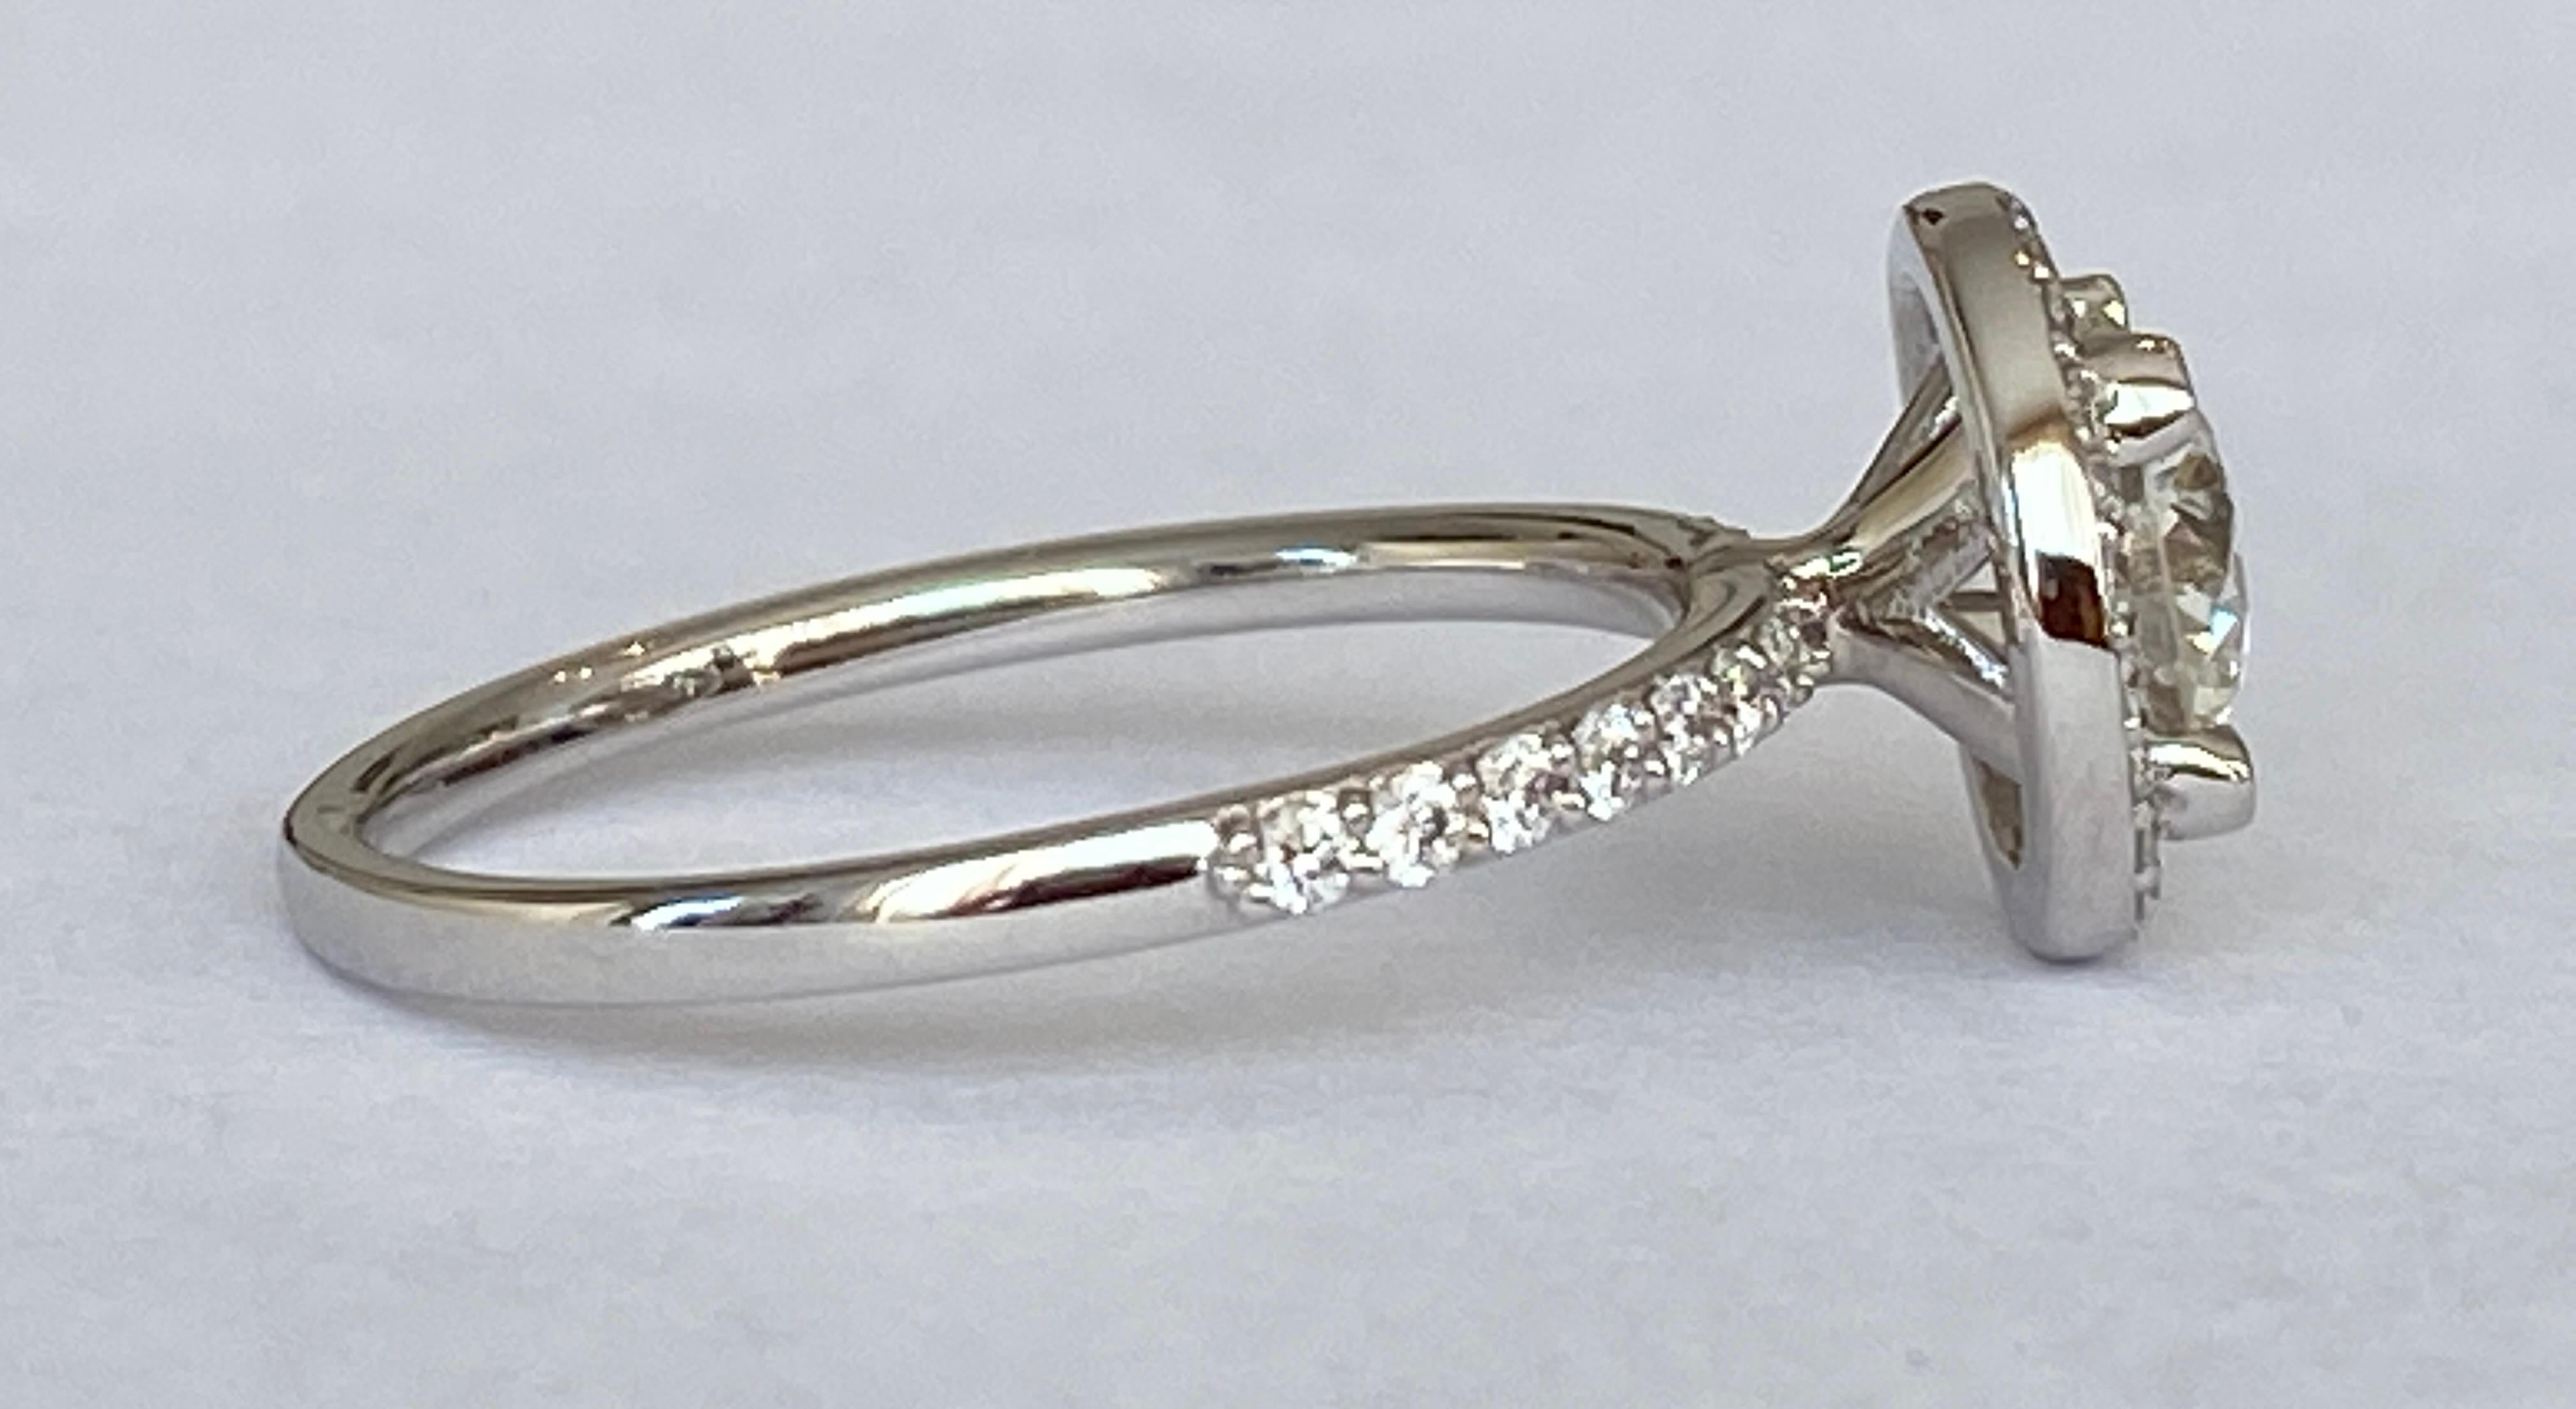 Brilliant Cut ALGT Certificied 1.36 Carat Diamond Engagement Ring For Sale